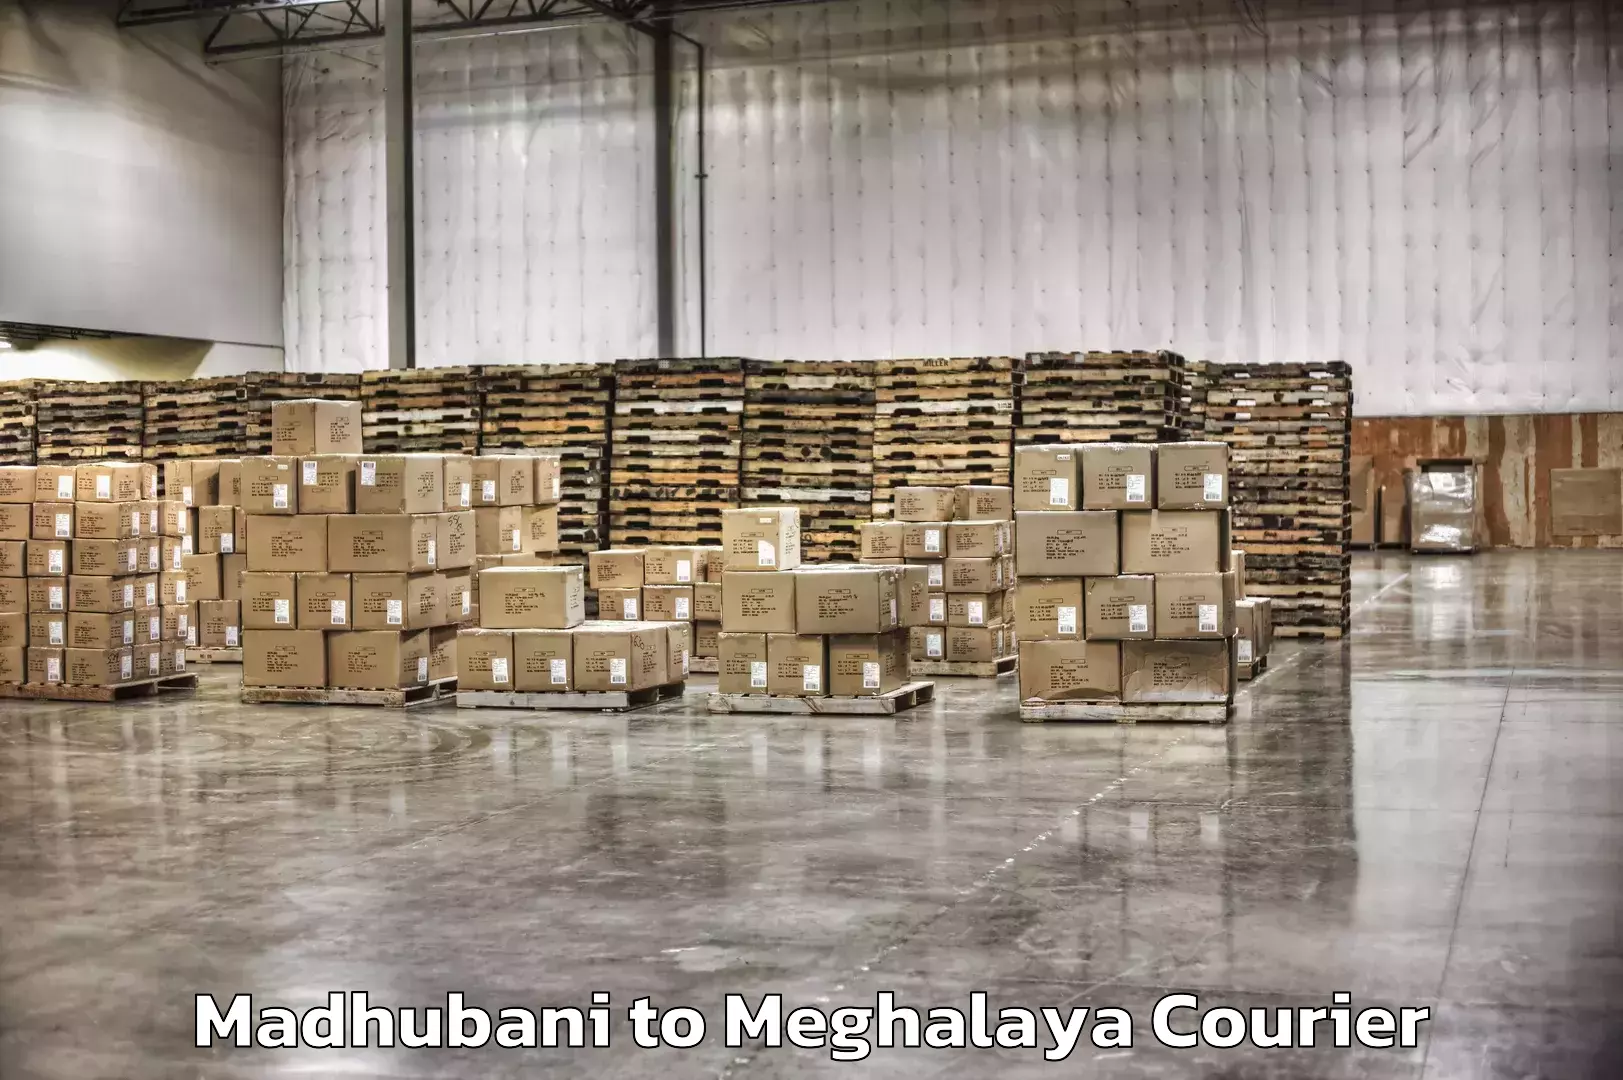 Efficient order fulfillment Madhubani to Meghalaya